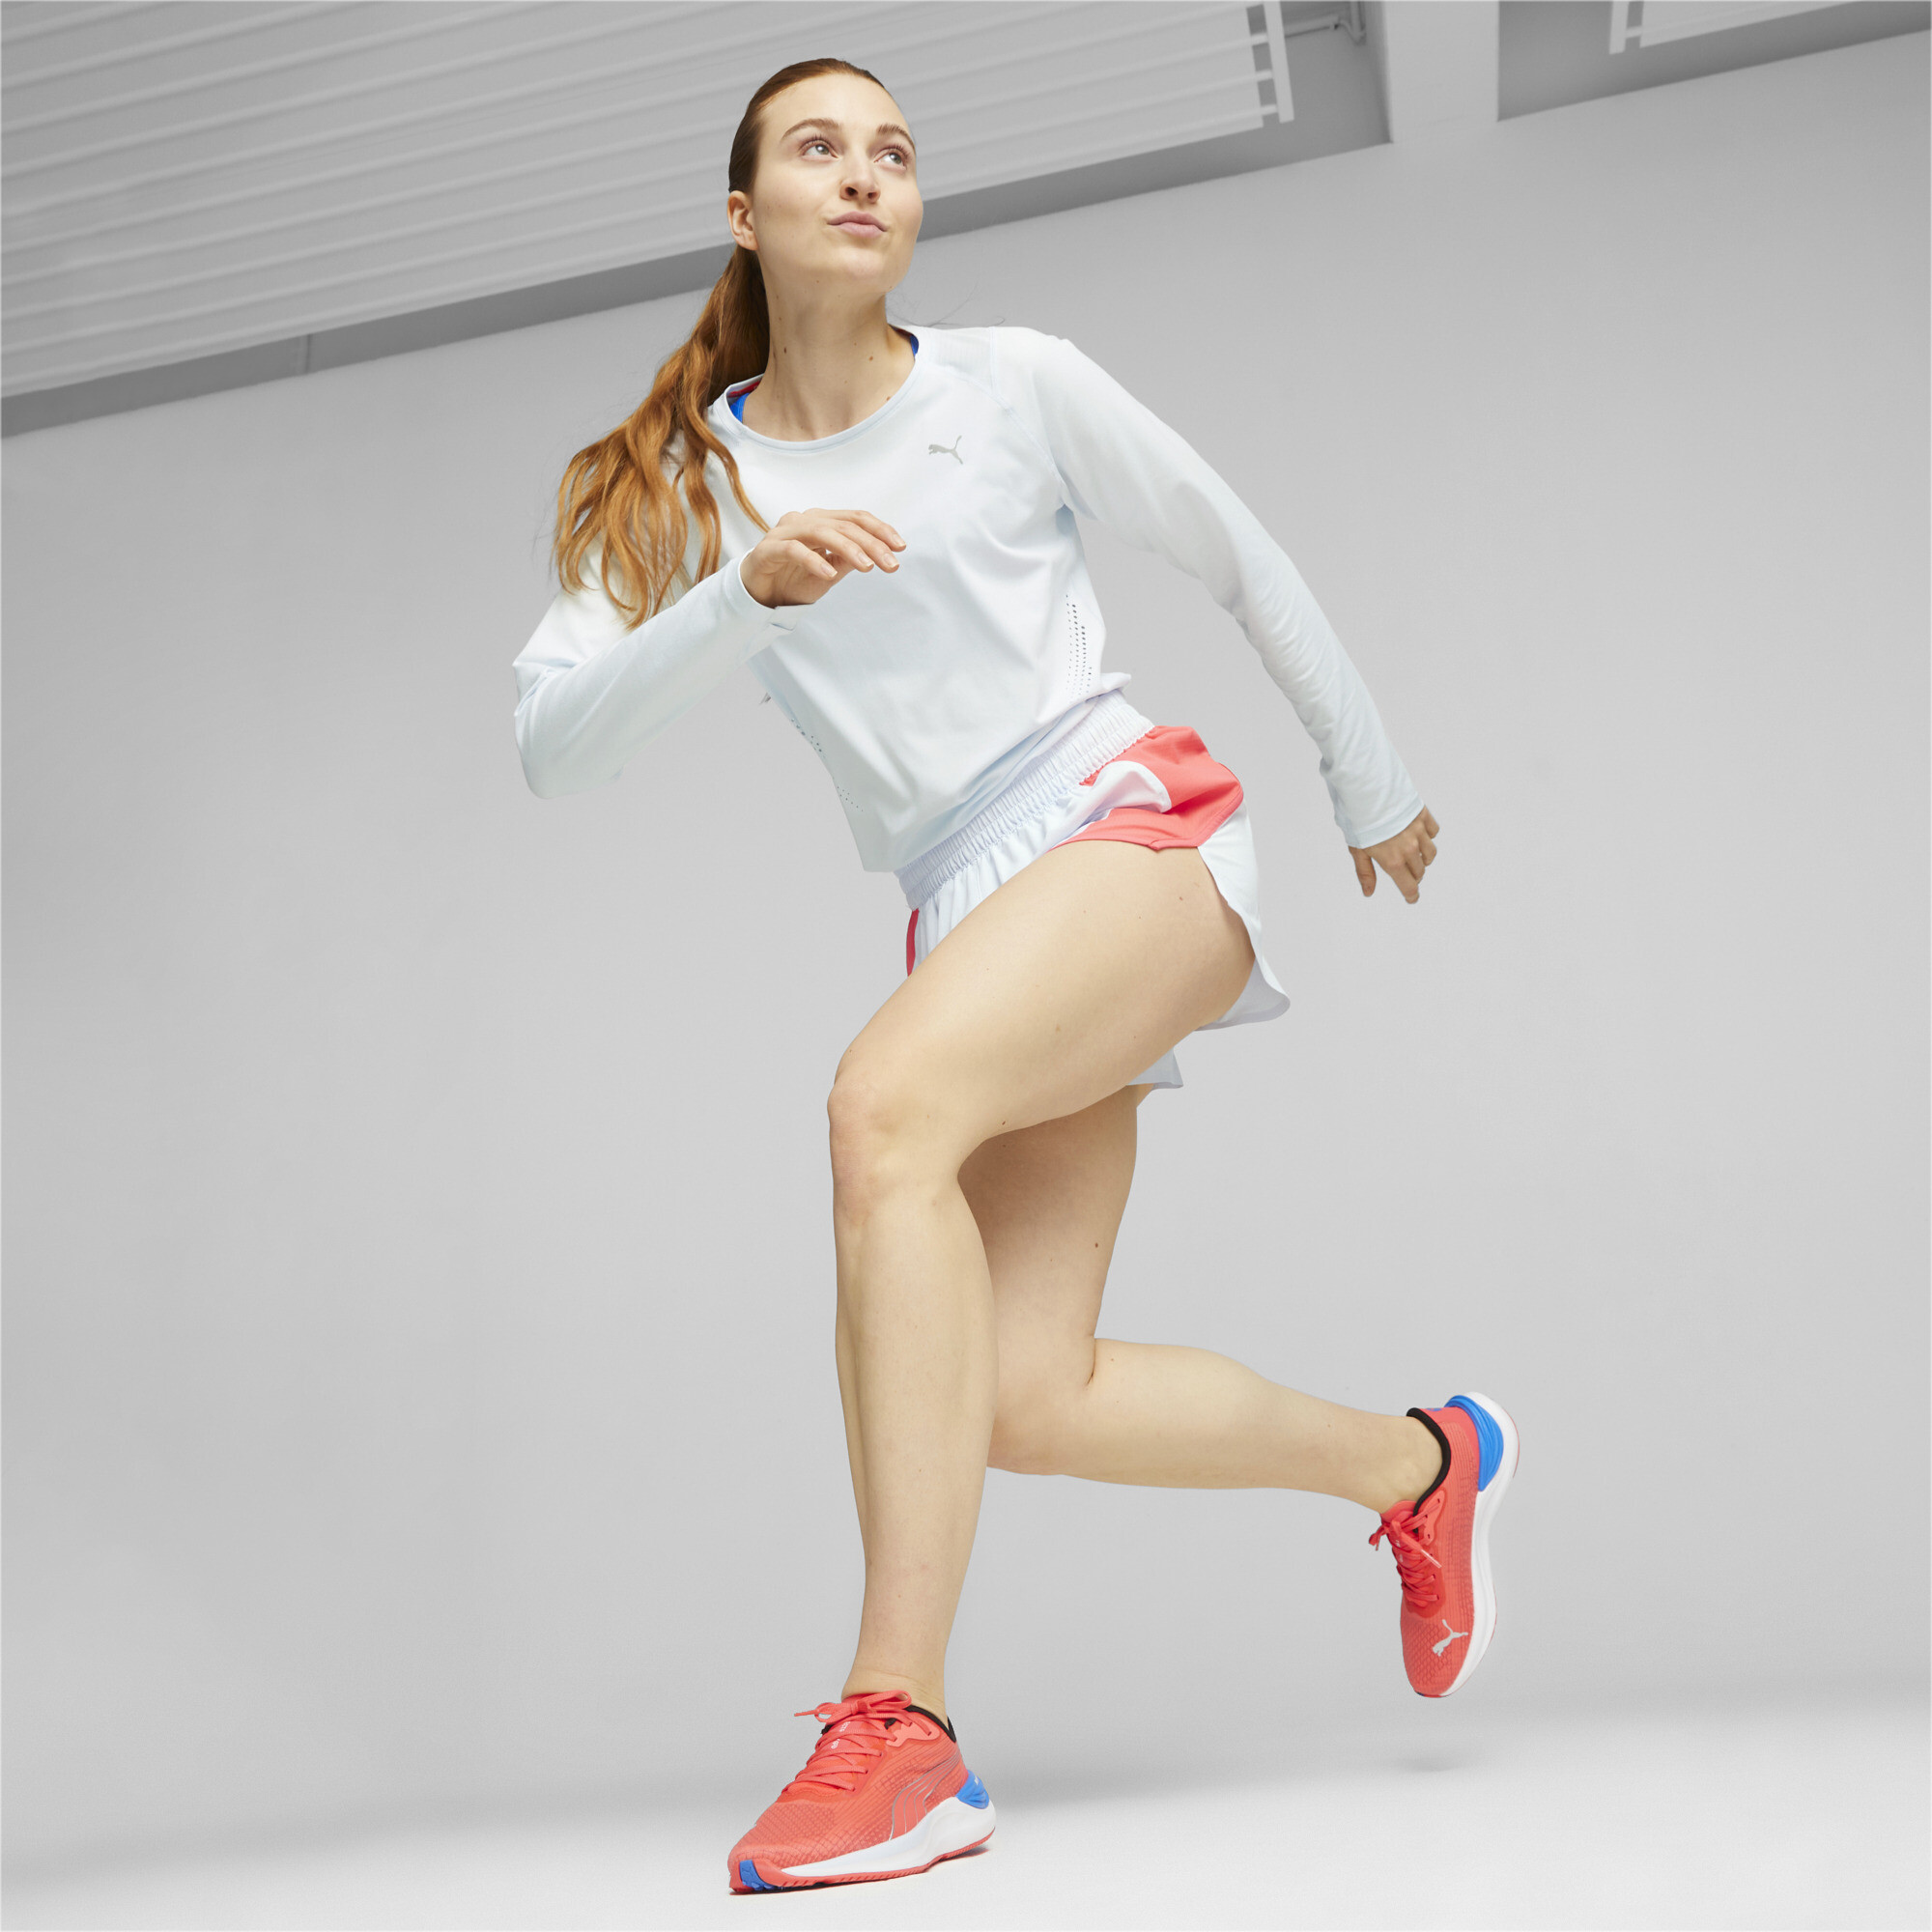 Women's PUMA Electrify NITROâ¢ 3 Running Shoes In Red, Size EU 41